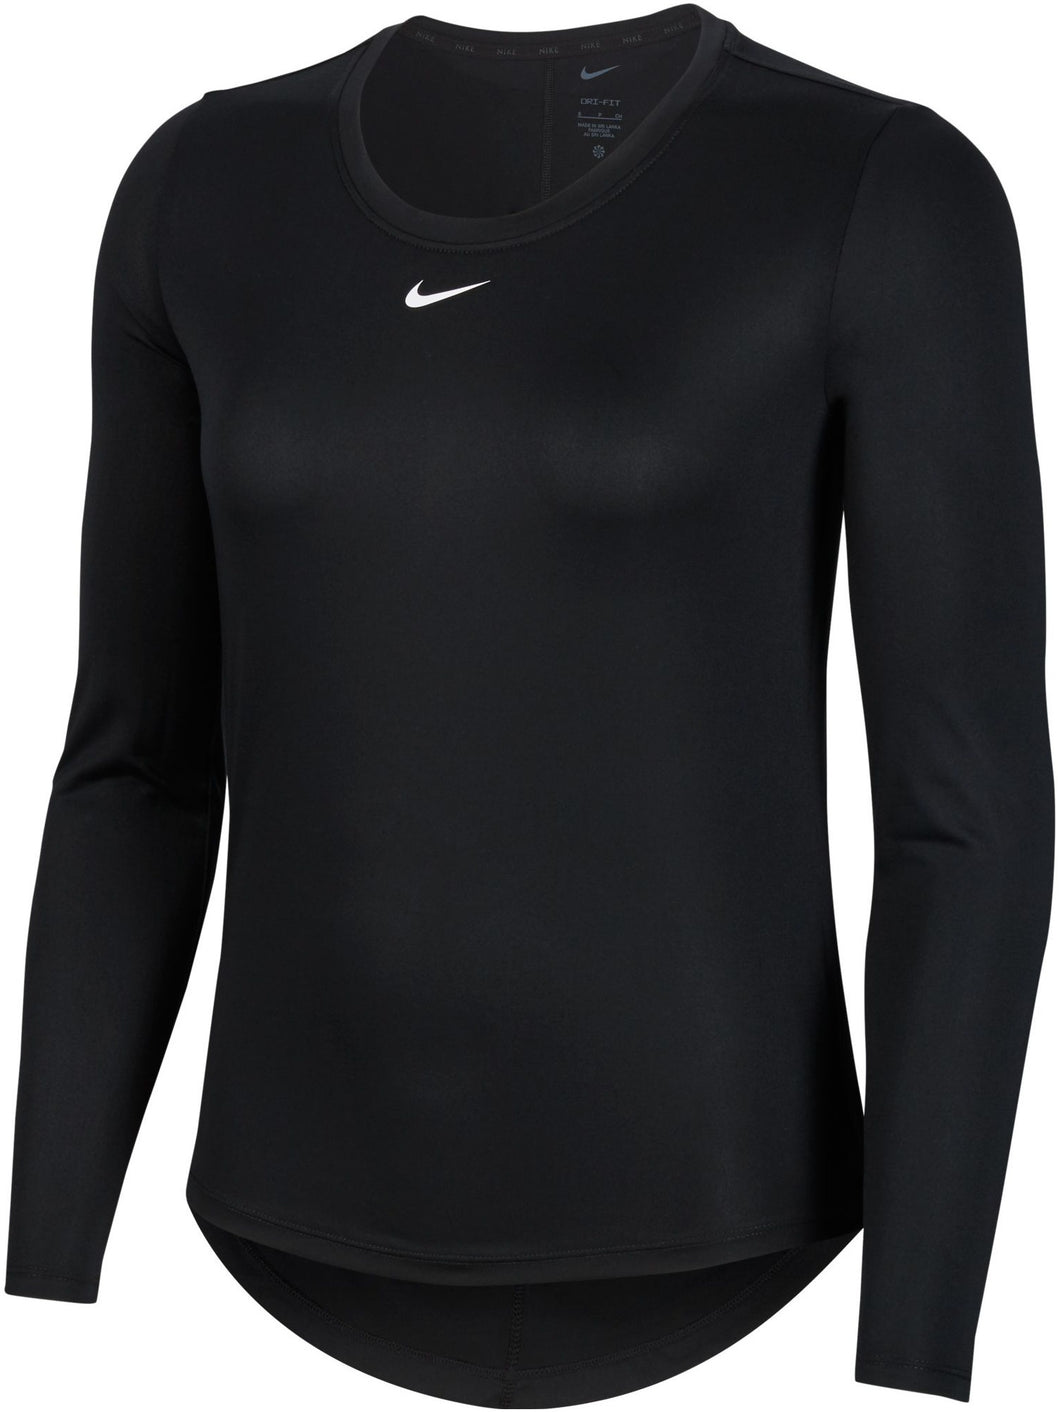 Nike Dri-FIT One Women's Standard Fit Long-Sleeve Top (Black)